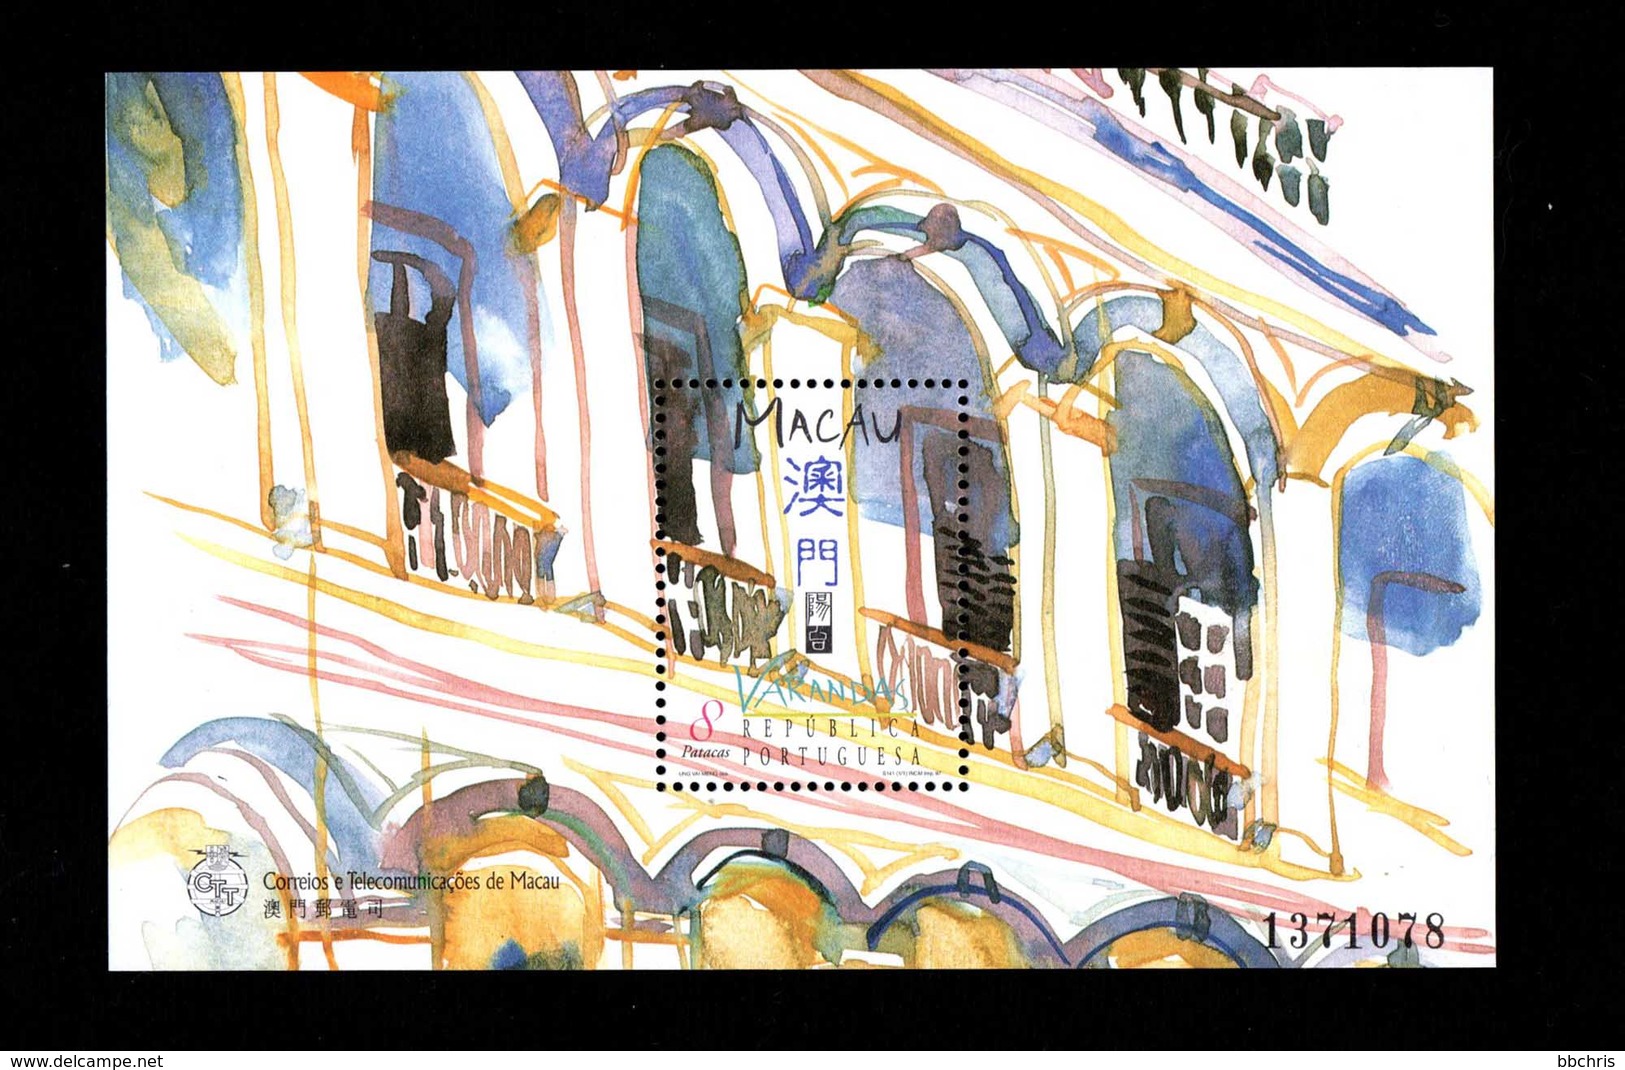 Macau Macao 1997 Varandas Balconies Painting Souvenir Sheet MNH Mint - Markenheftchen